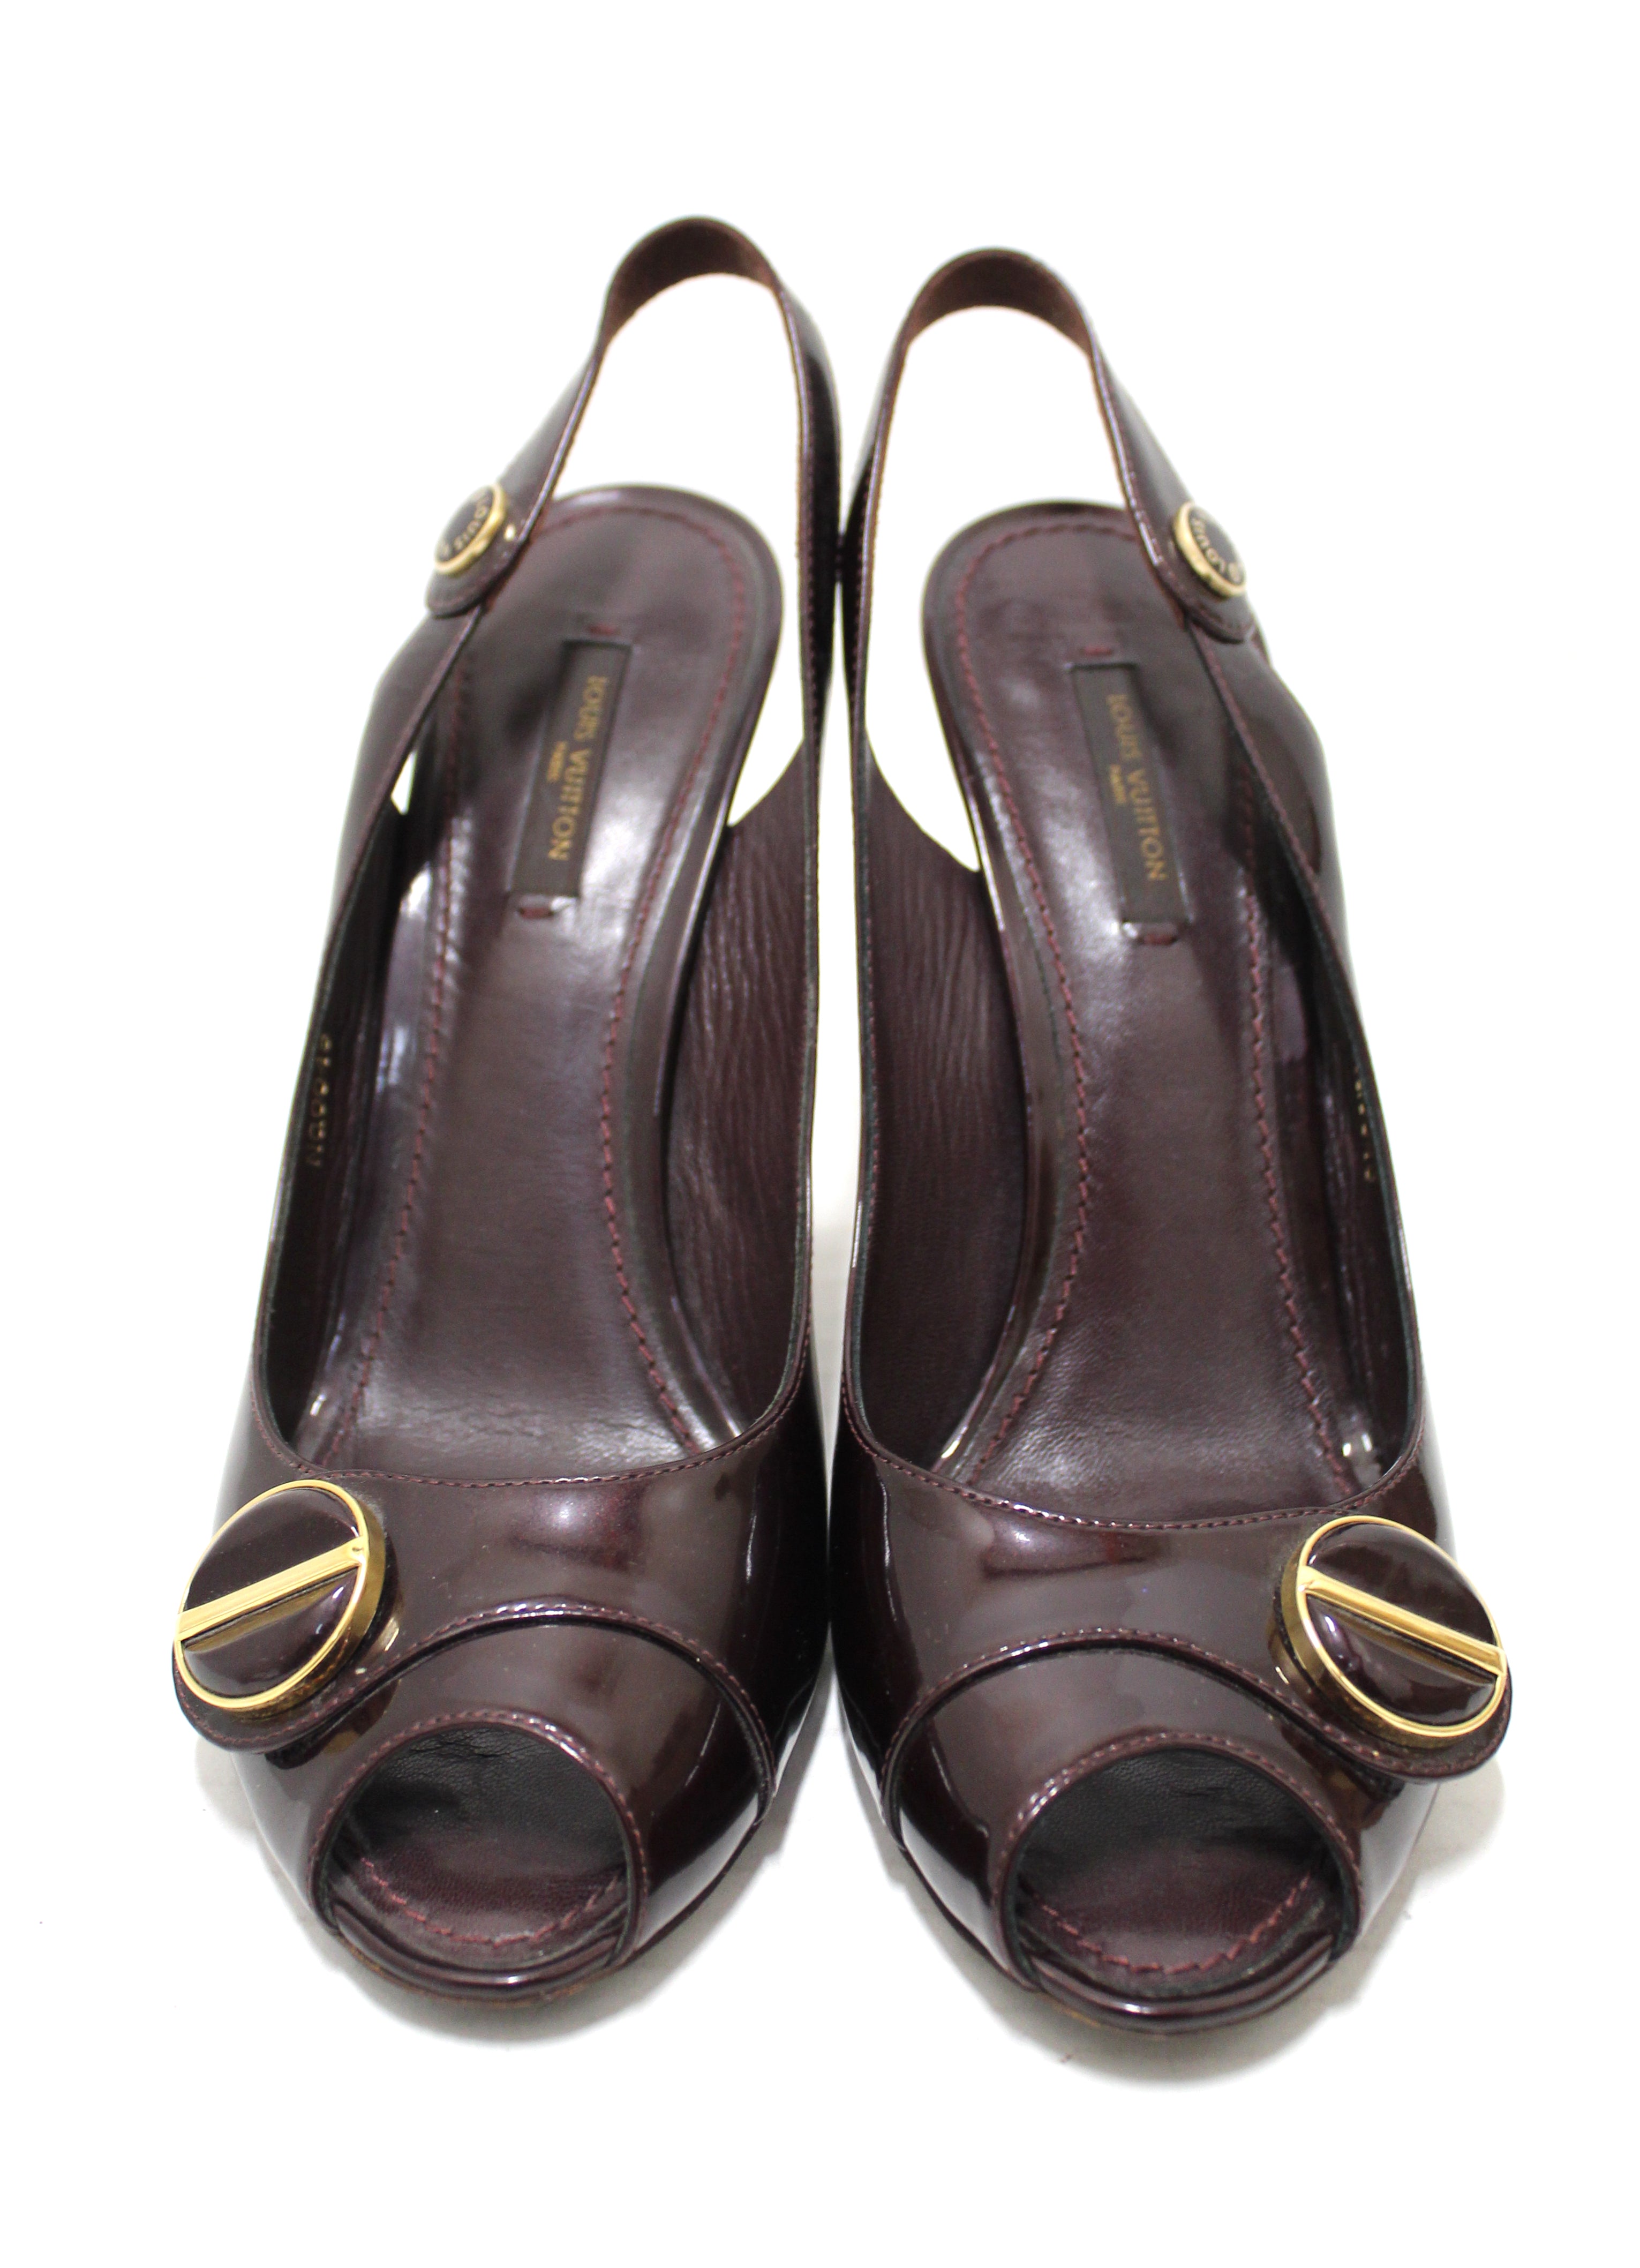 Louis Vuitton Authenticated Patent Leather Sandal